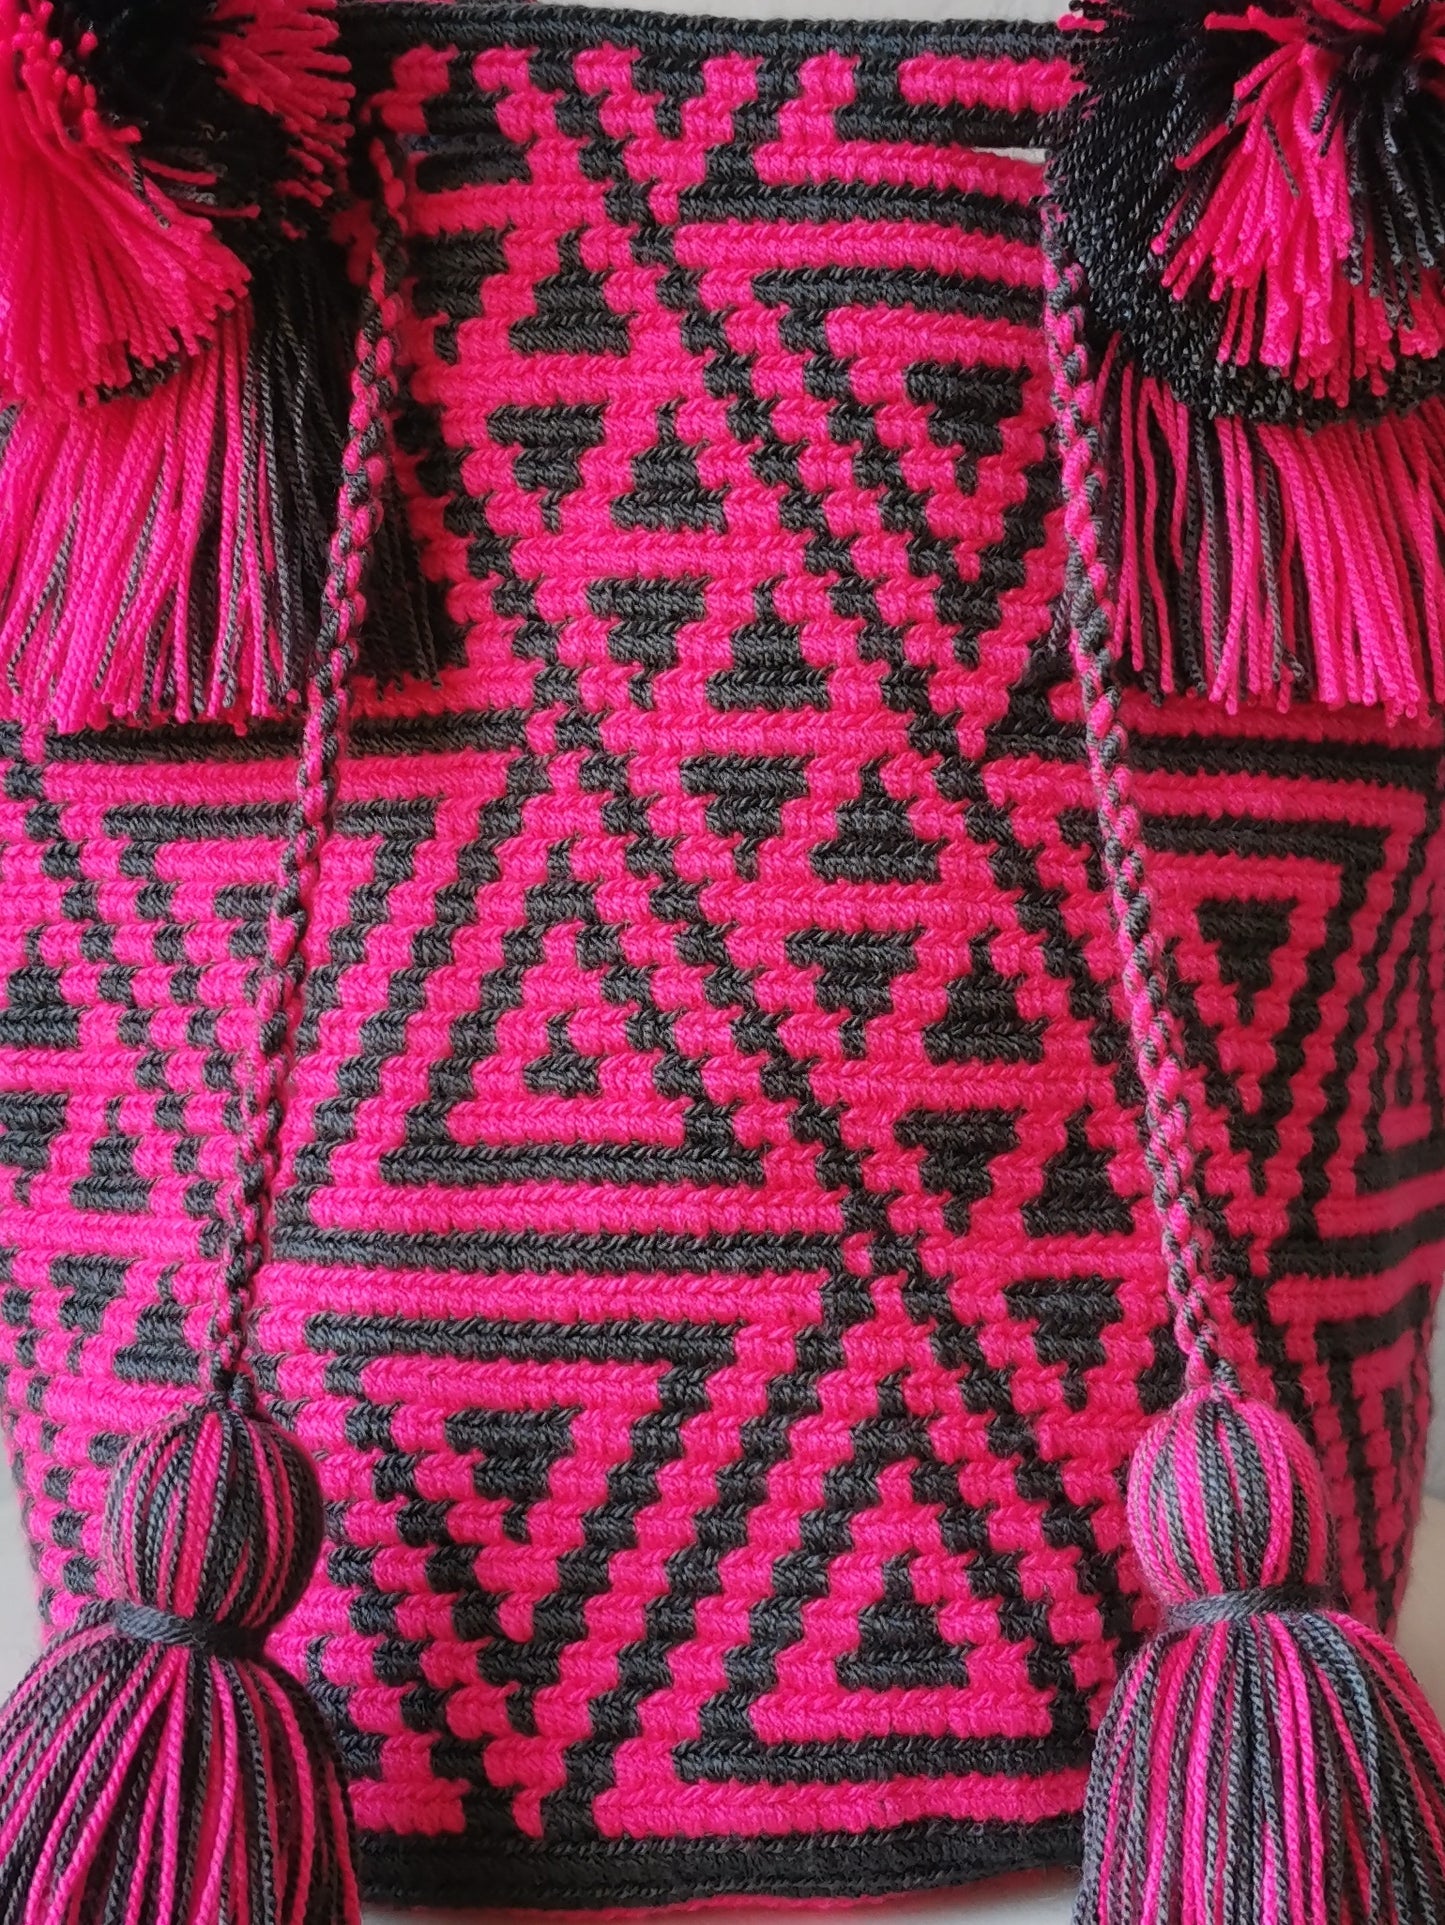 END OF SERIES - M dark gray and bright pink mochila handbag